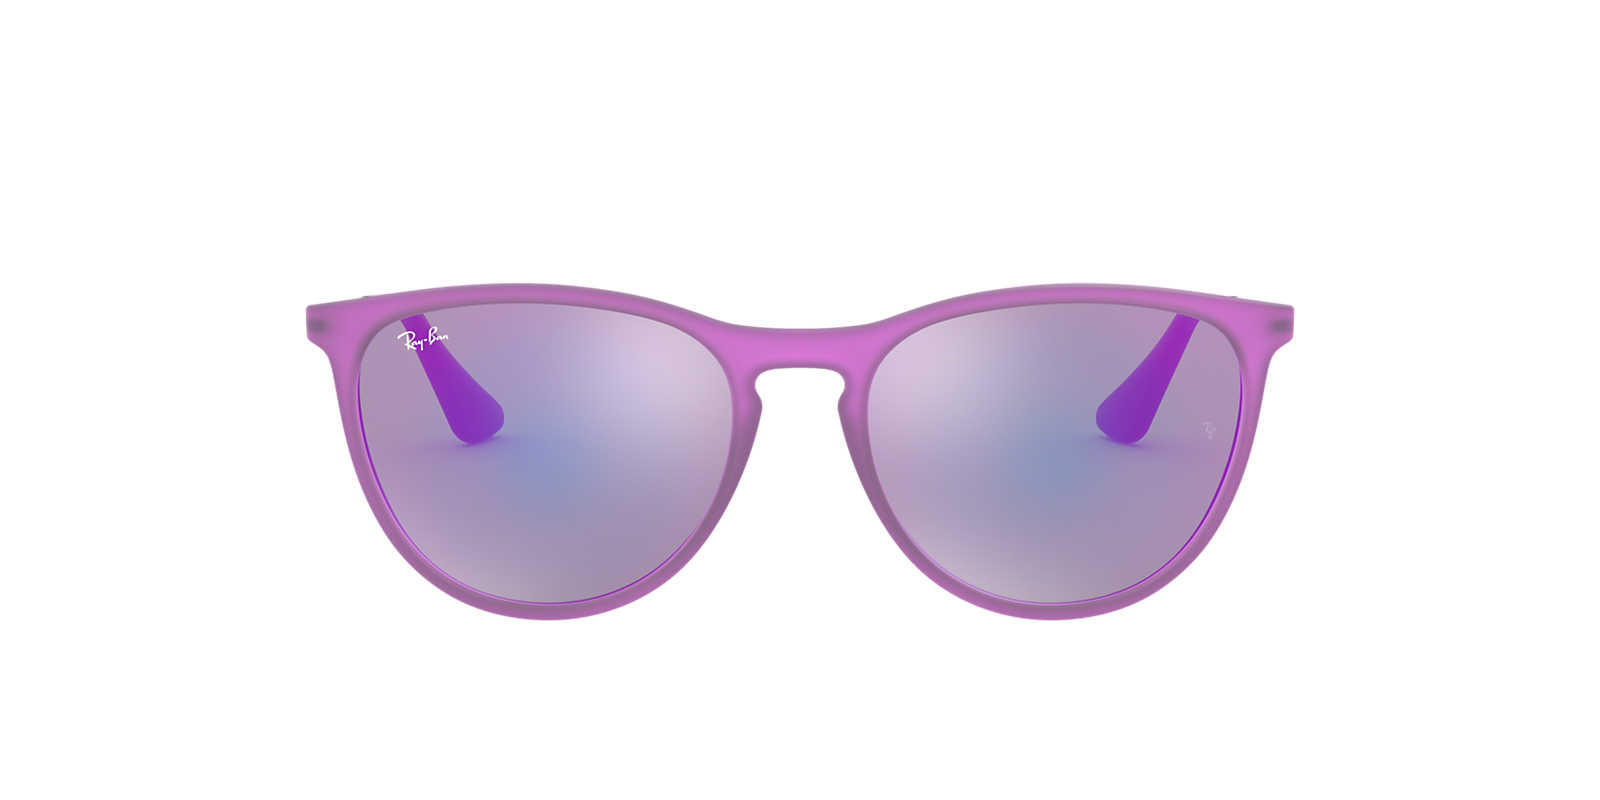 2019 cheap ray ban sale sunglasses free shiping